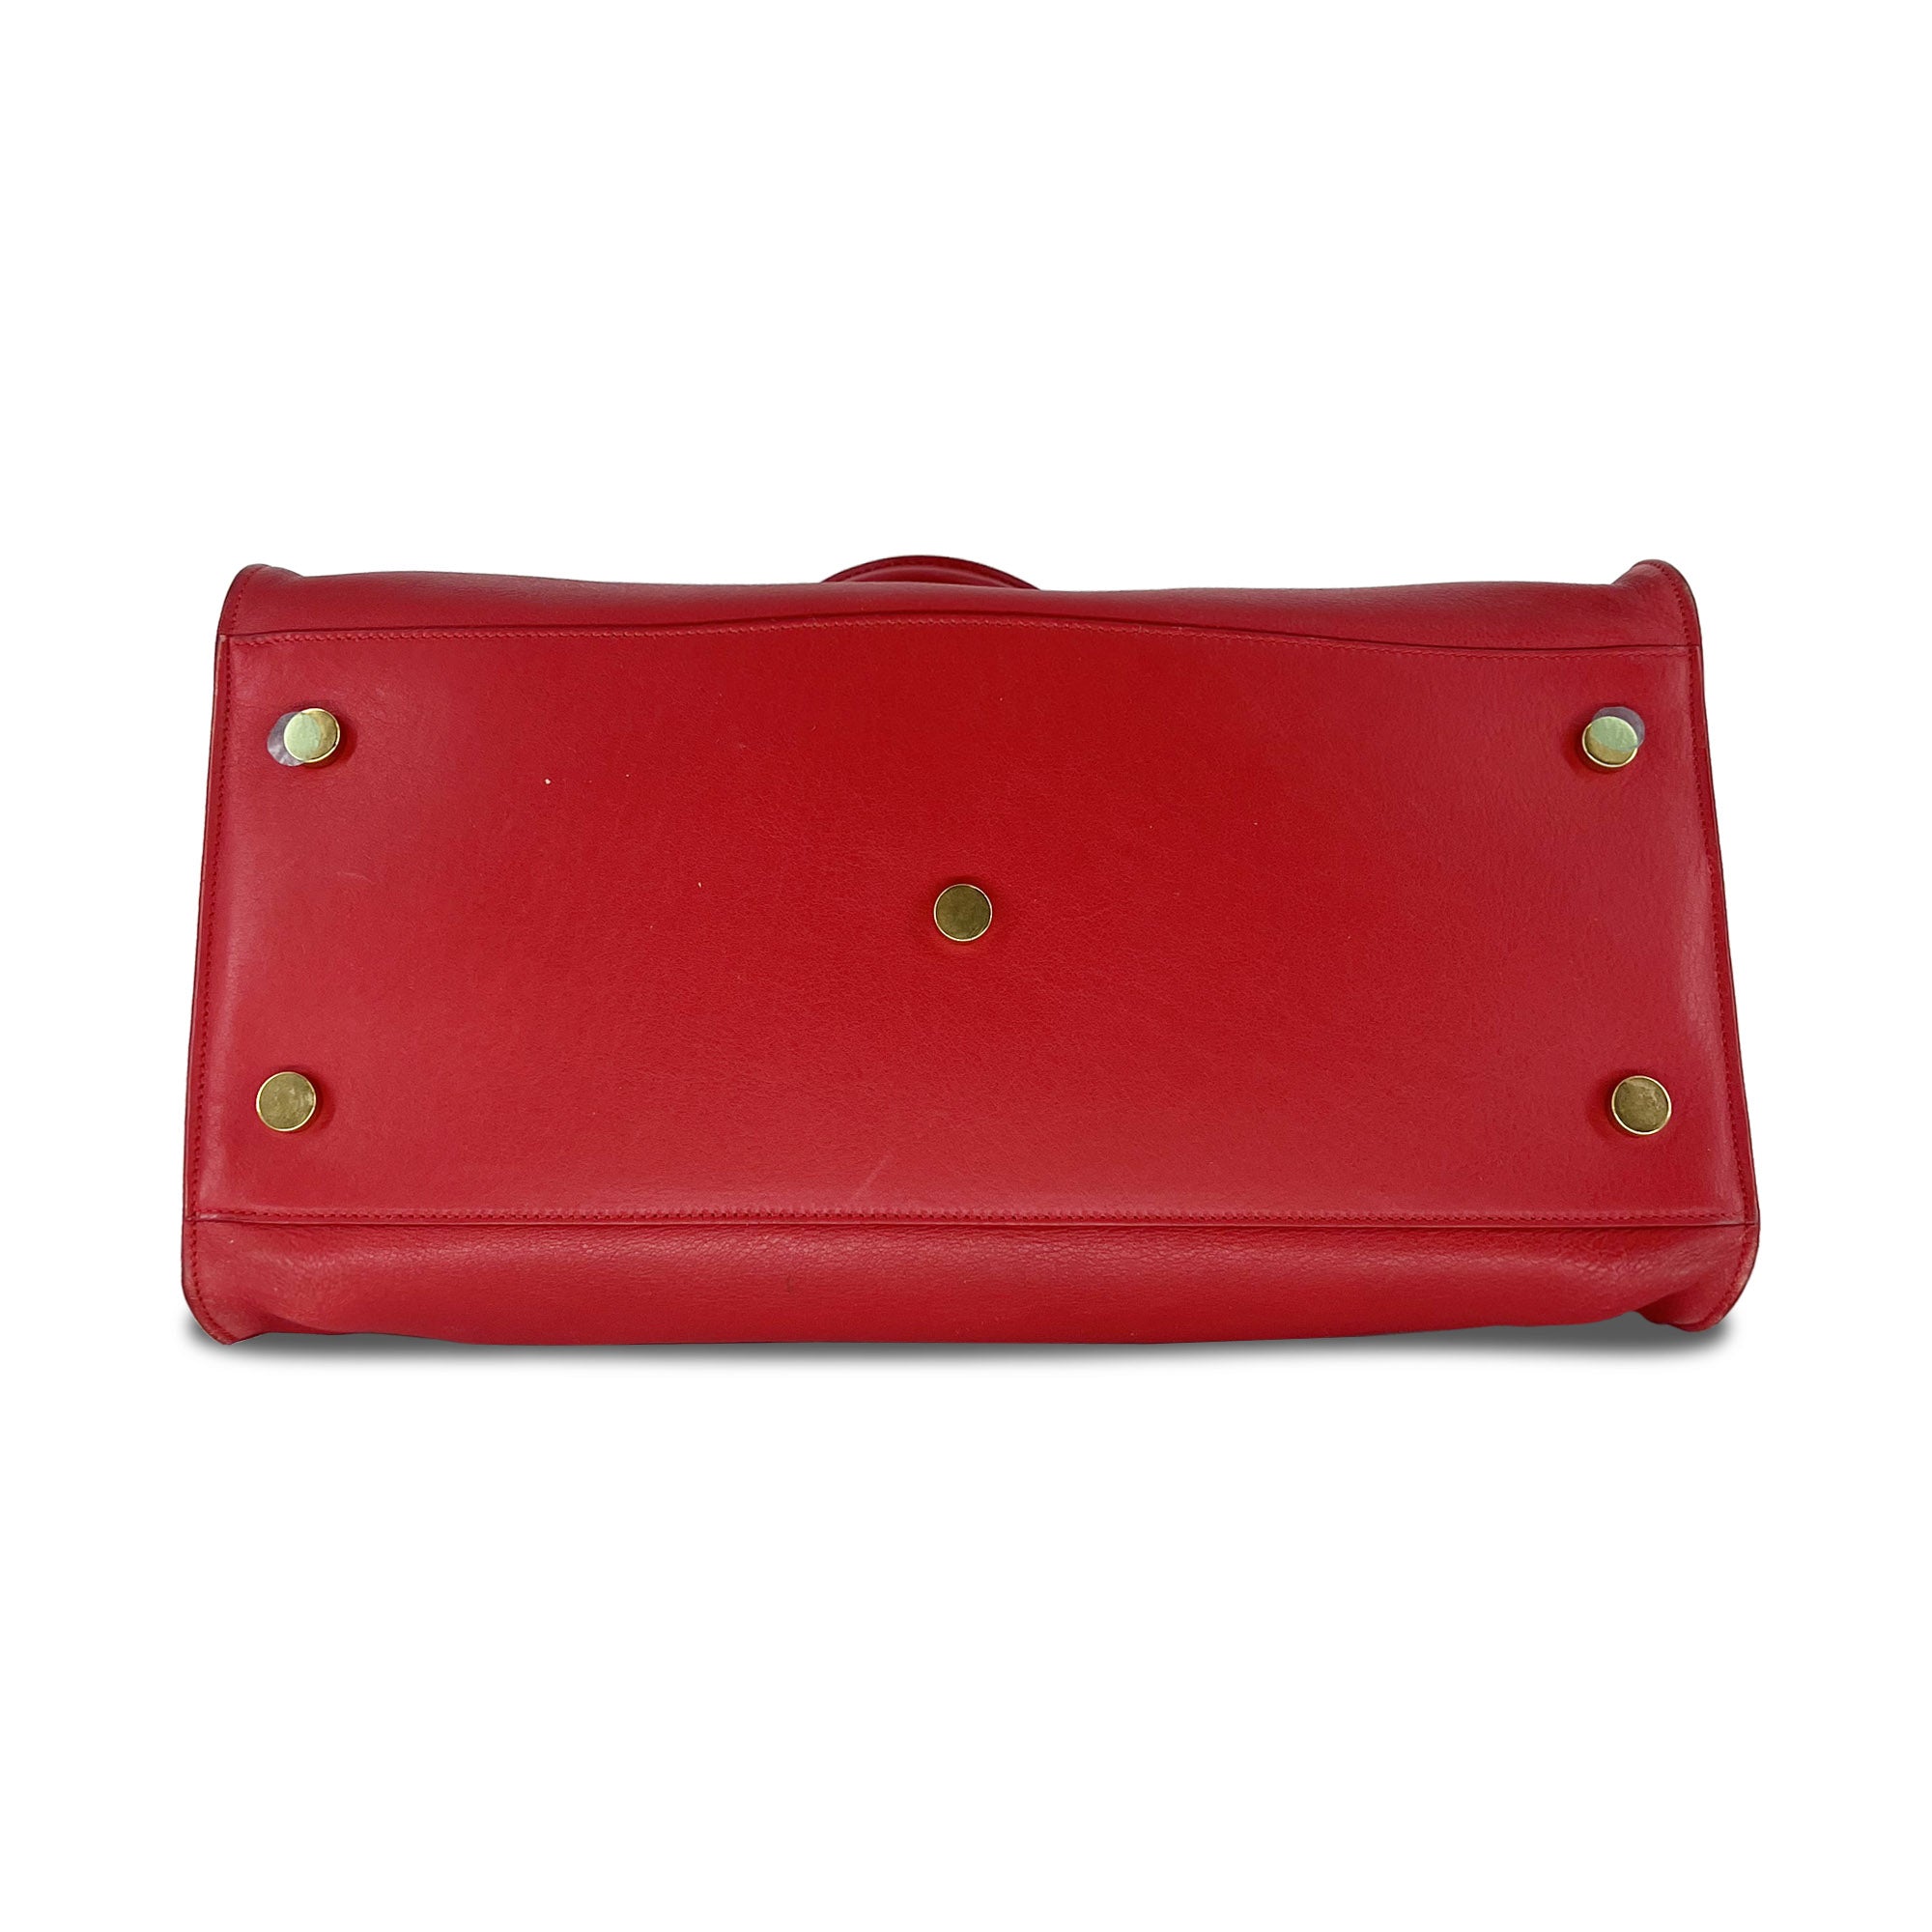 Yves Saint Laurent Red Chyc Handbag